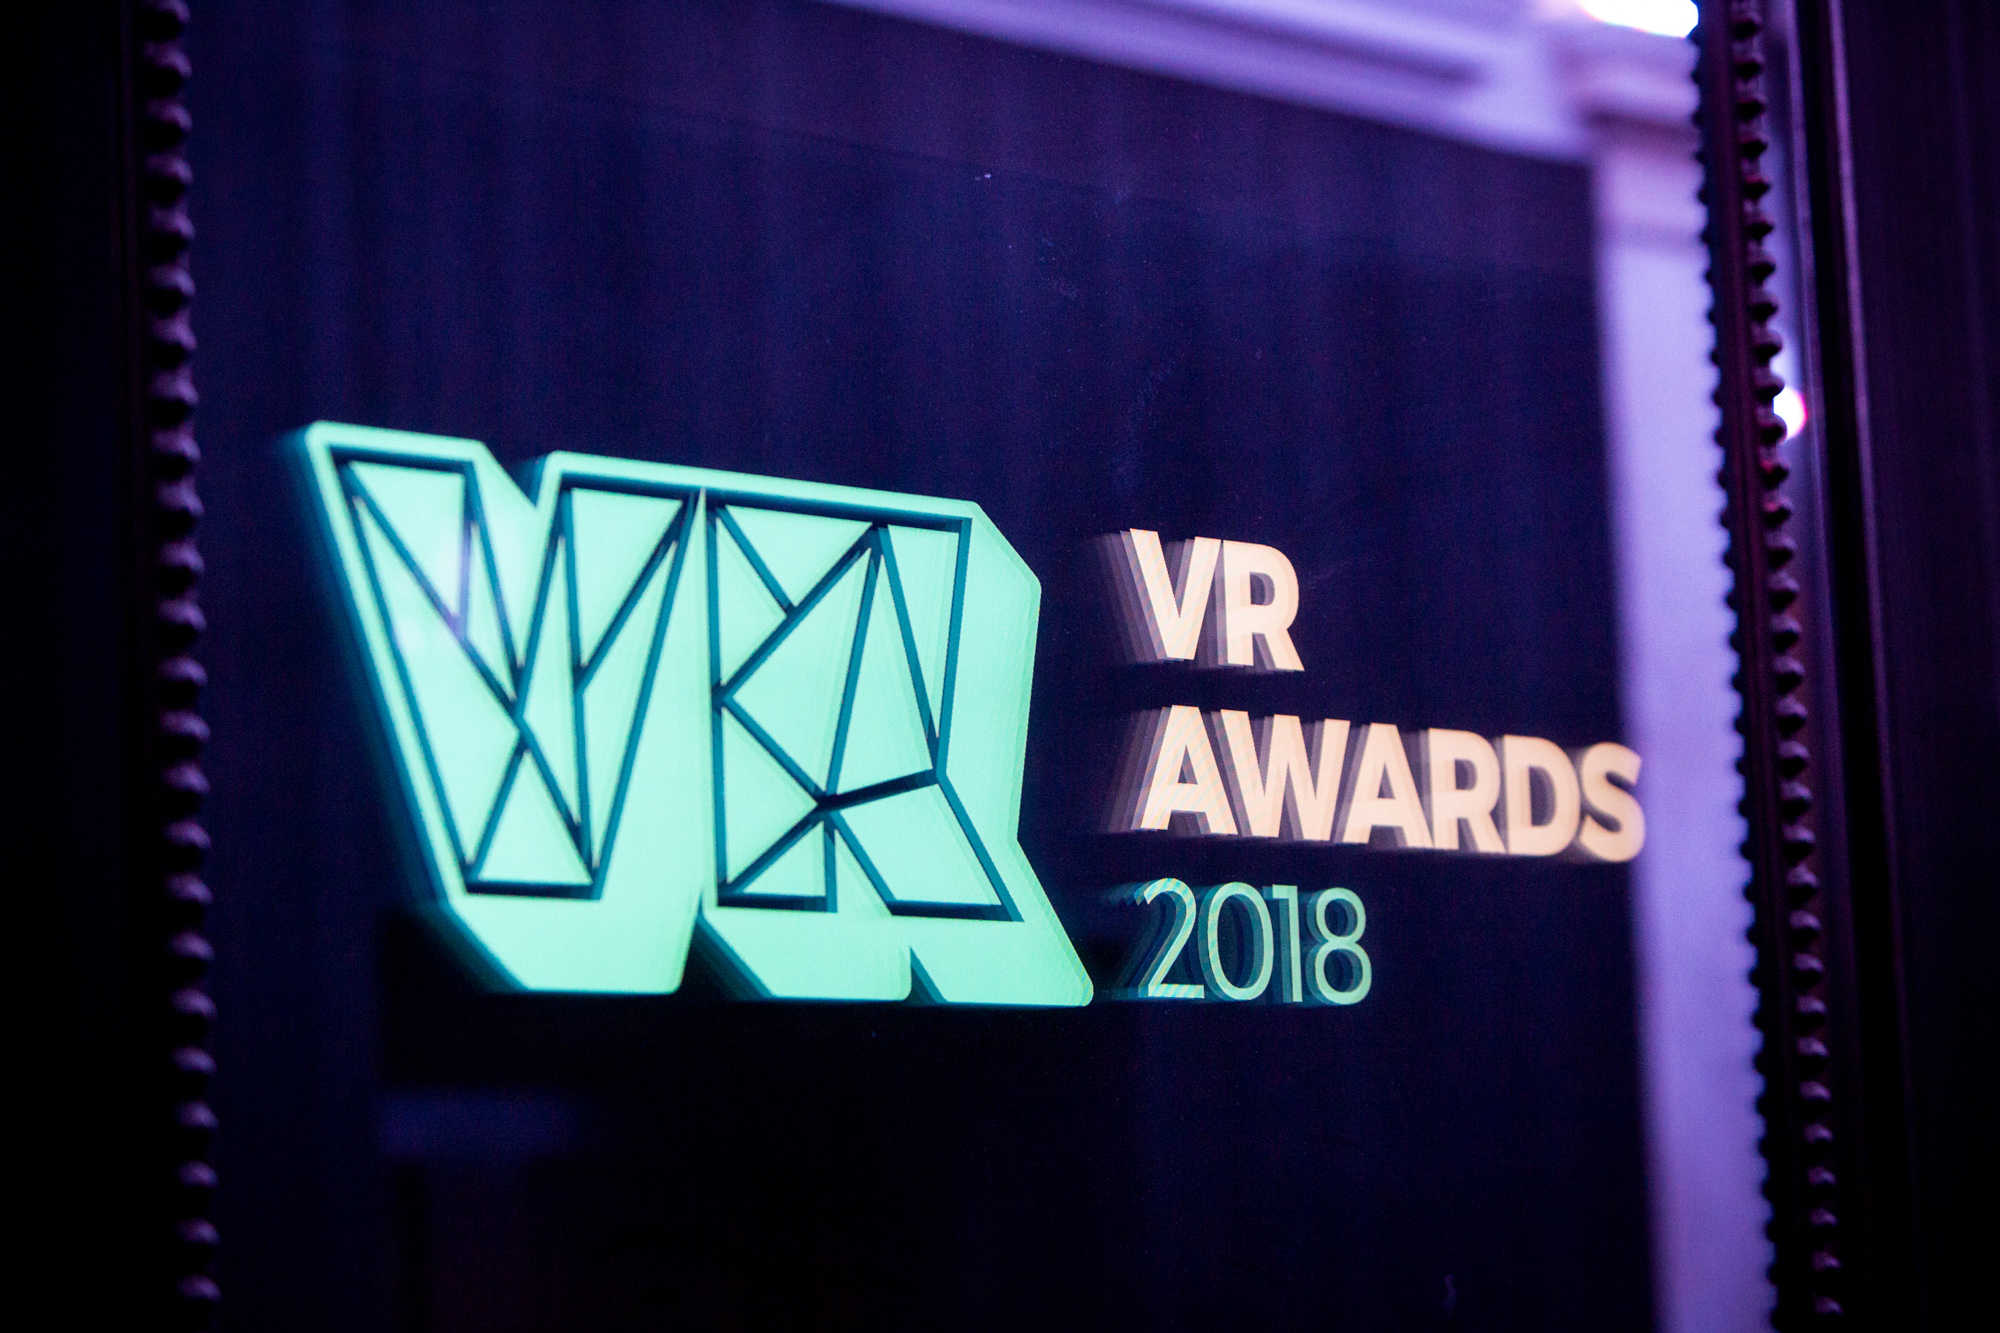 Raccoon_London_VR_Awards_2018_Event_Photography-2.jpg